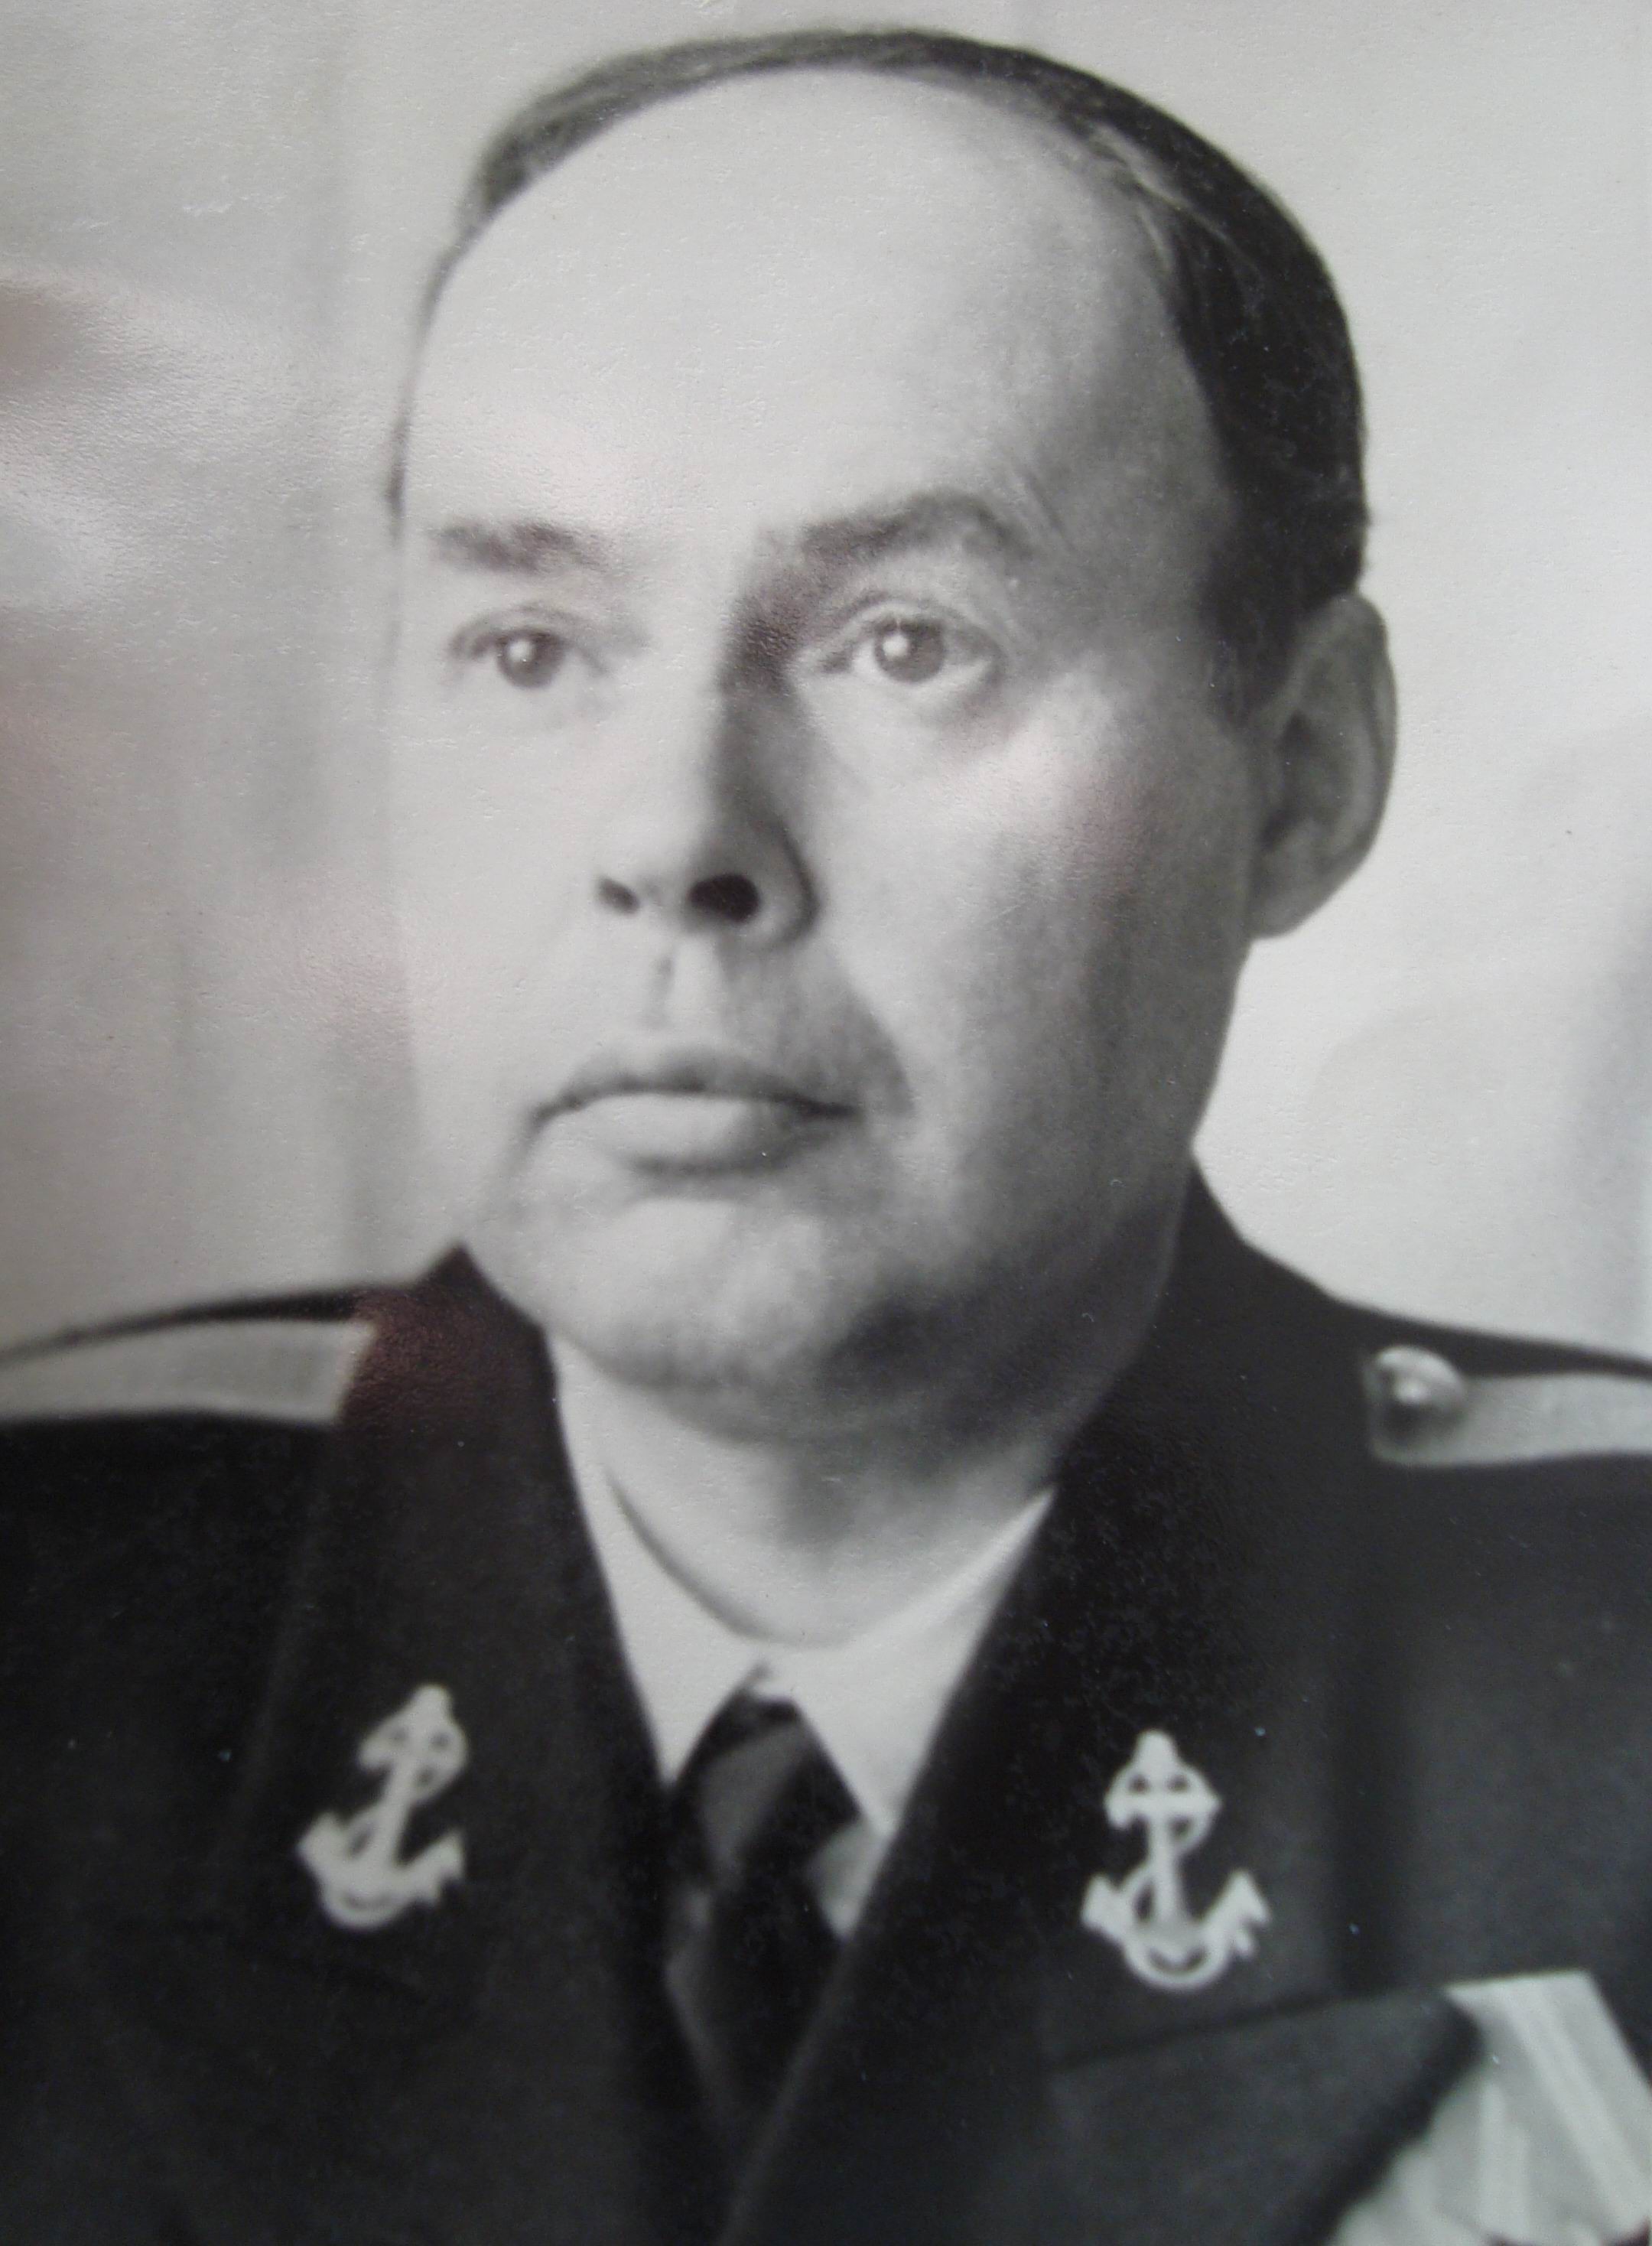 Мичман Рымашевский Л. М. – 1955 год